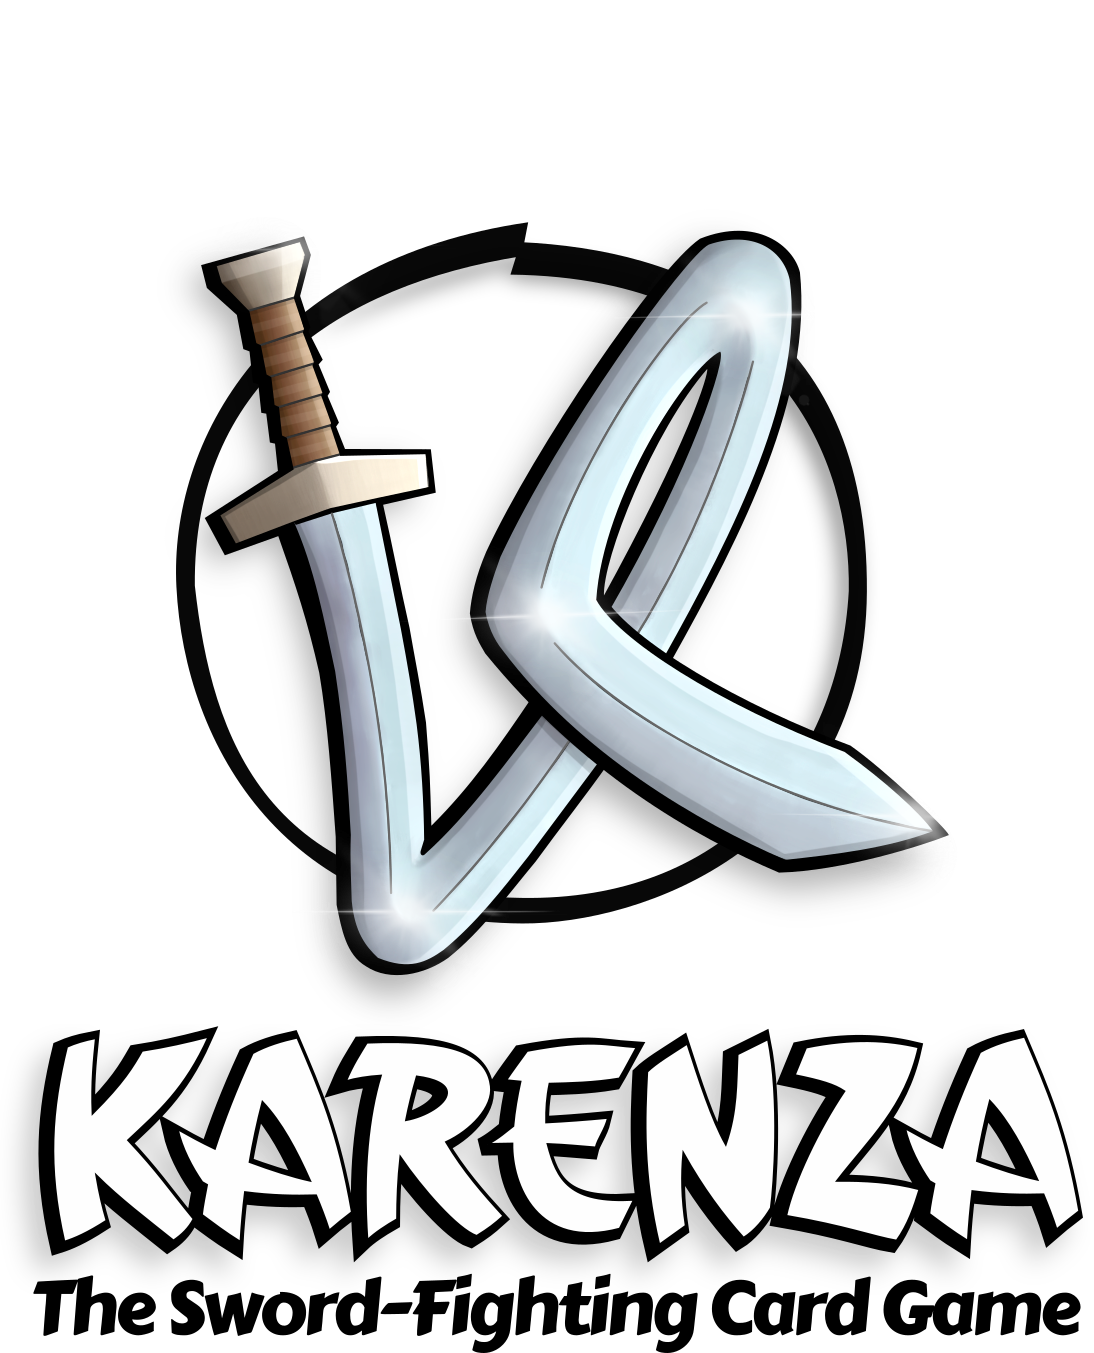 Karenza - The sword-fighting card game.